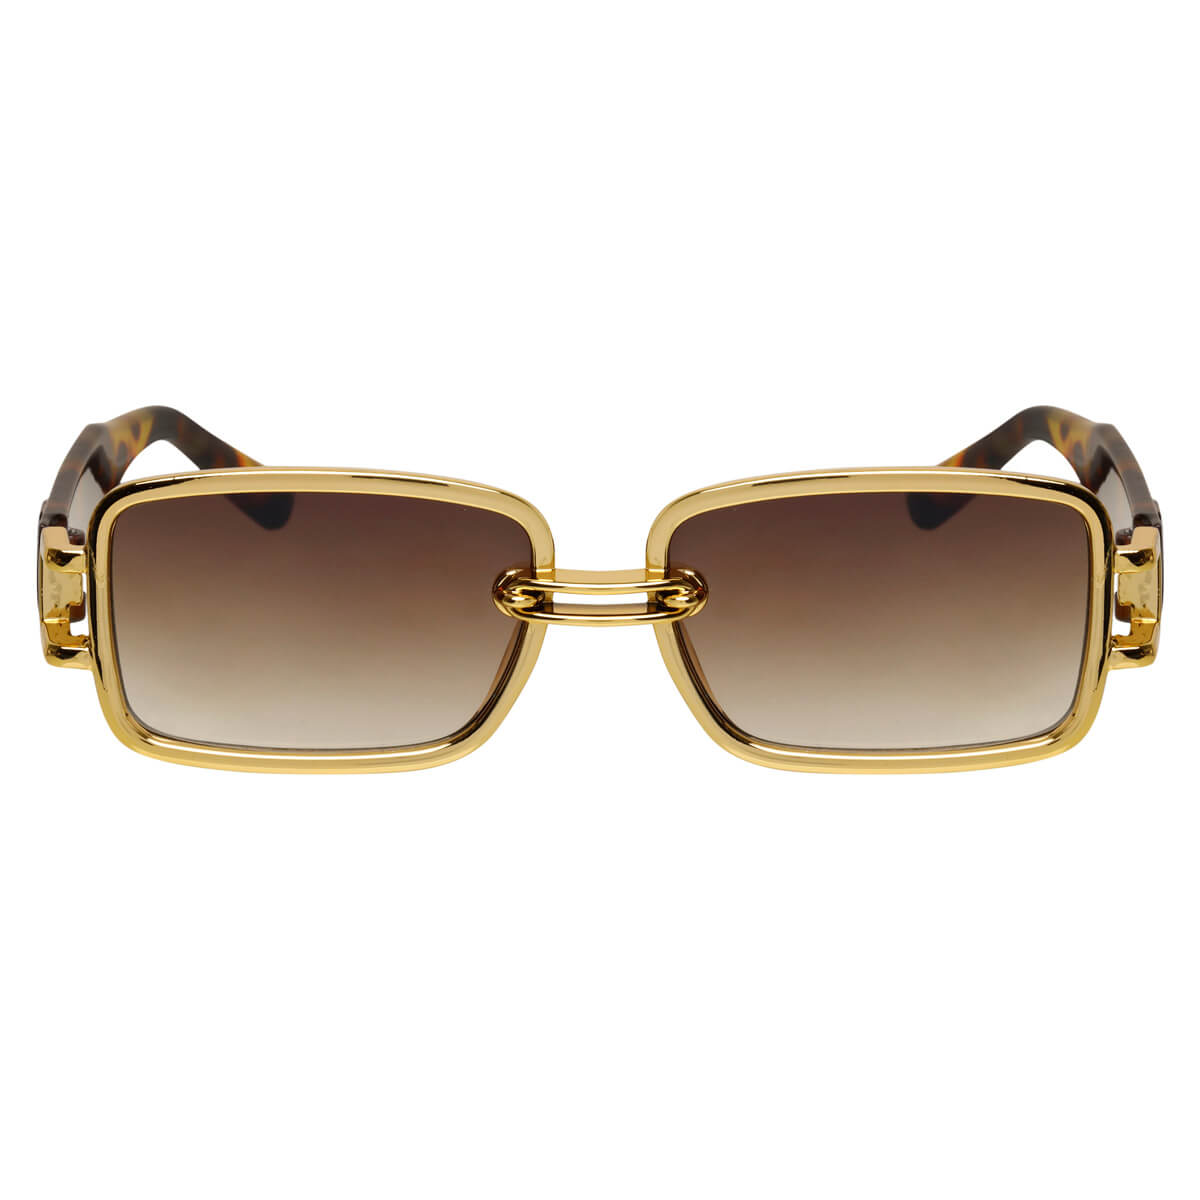 Rectangular sunglasses with metallic shine frames